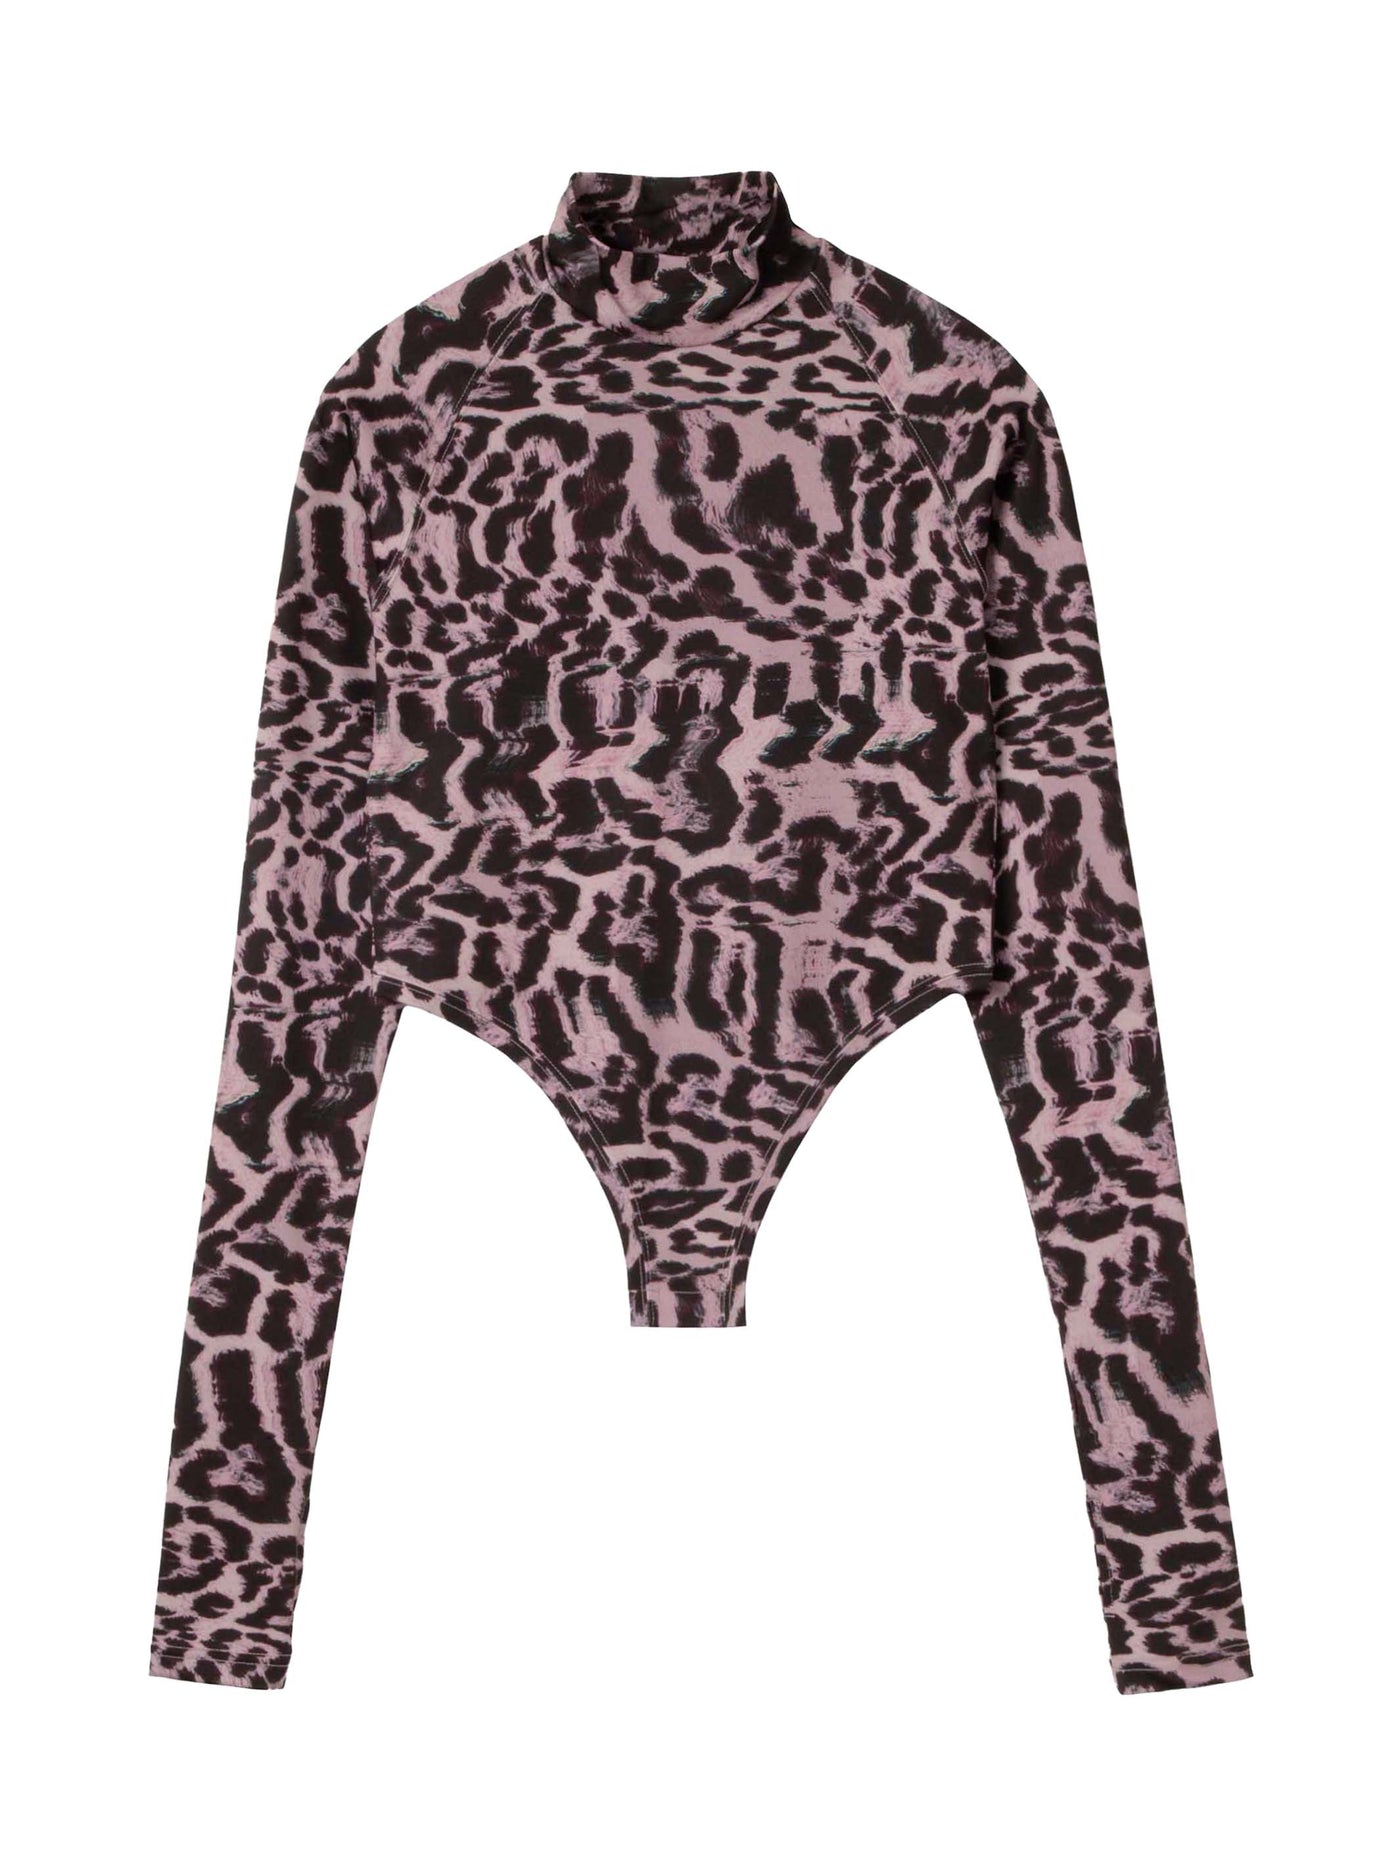 Leopard print bodysuit hi-neck top